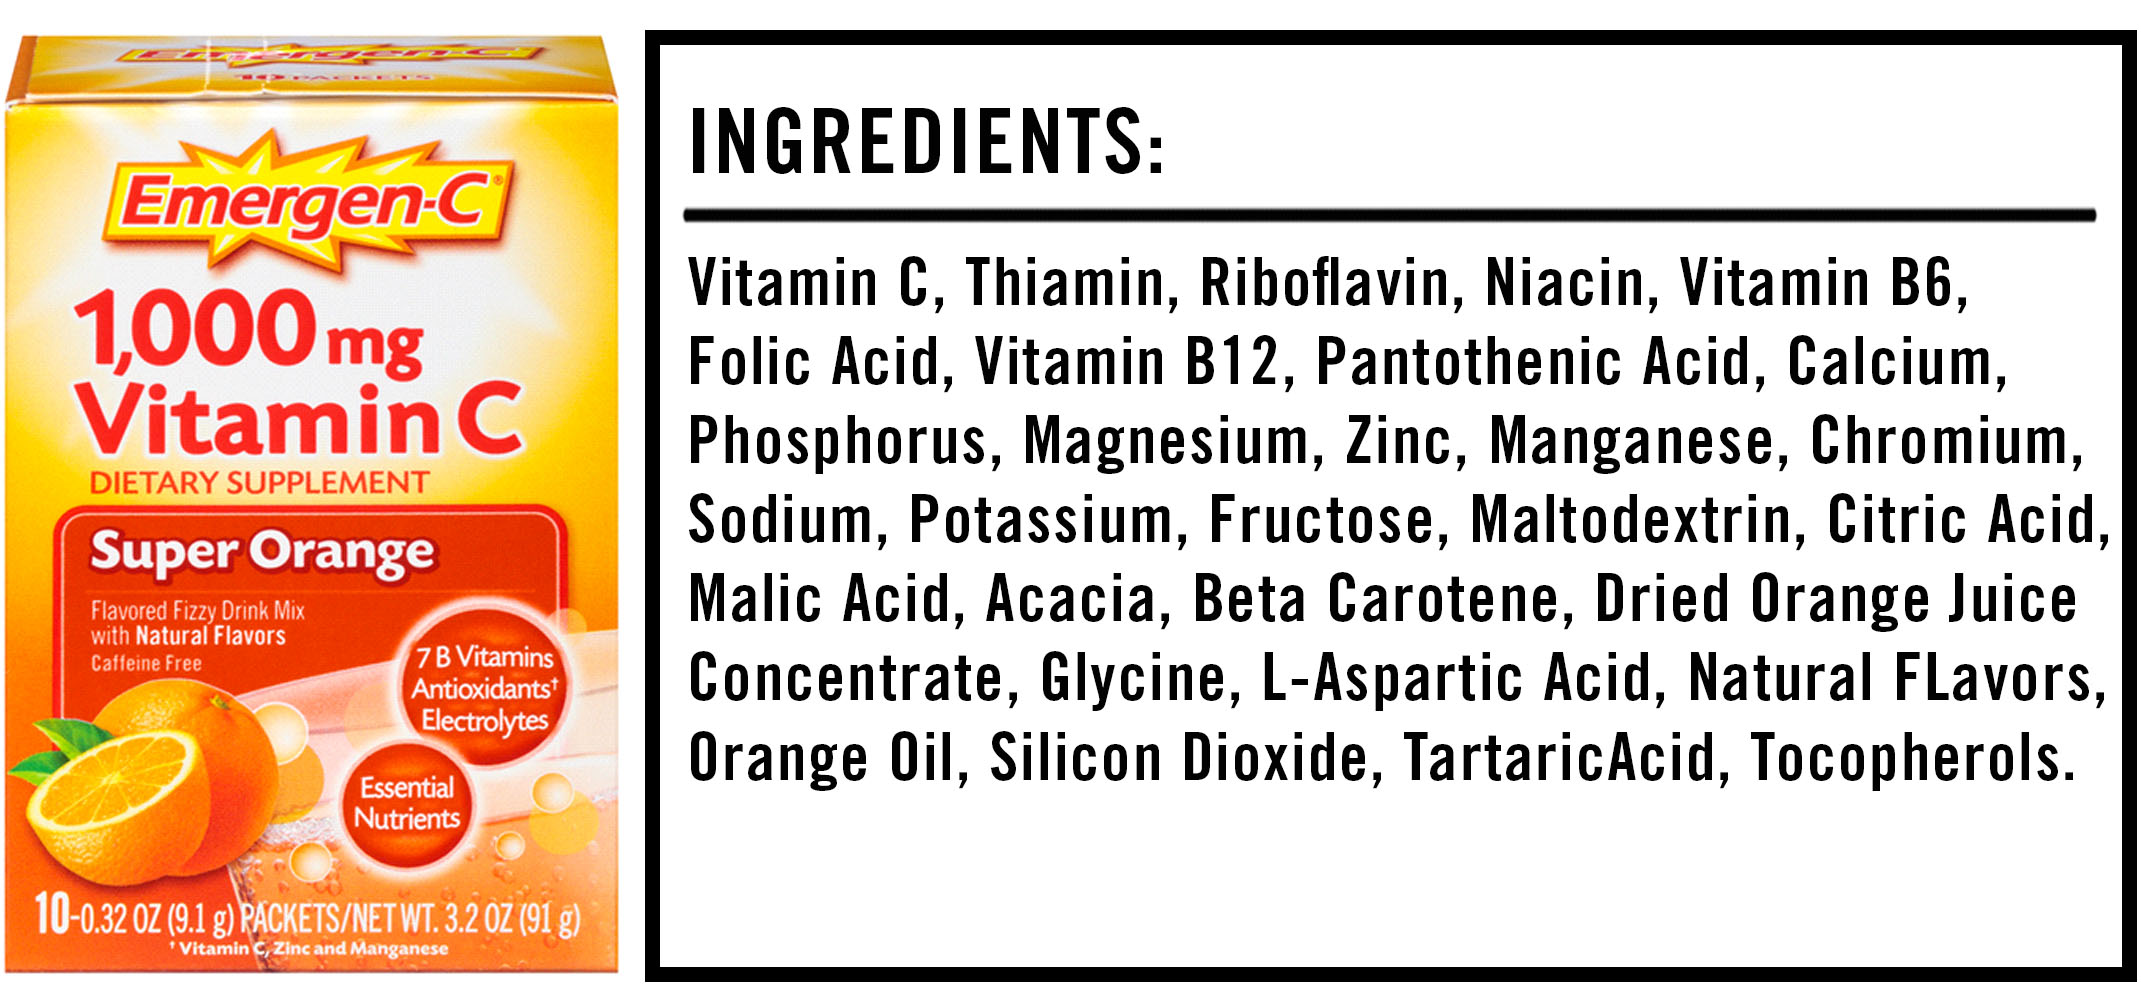 Emergen-C for Coronavirus: All the Ingredients in Vitamin C Powder